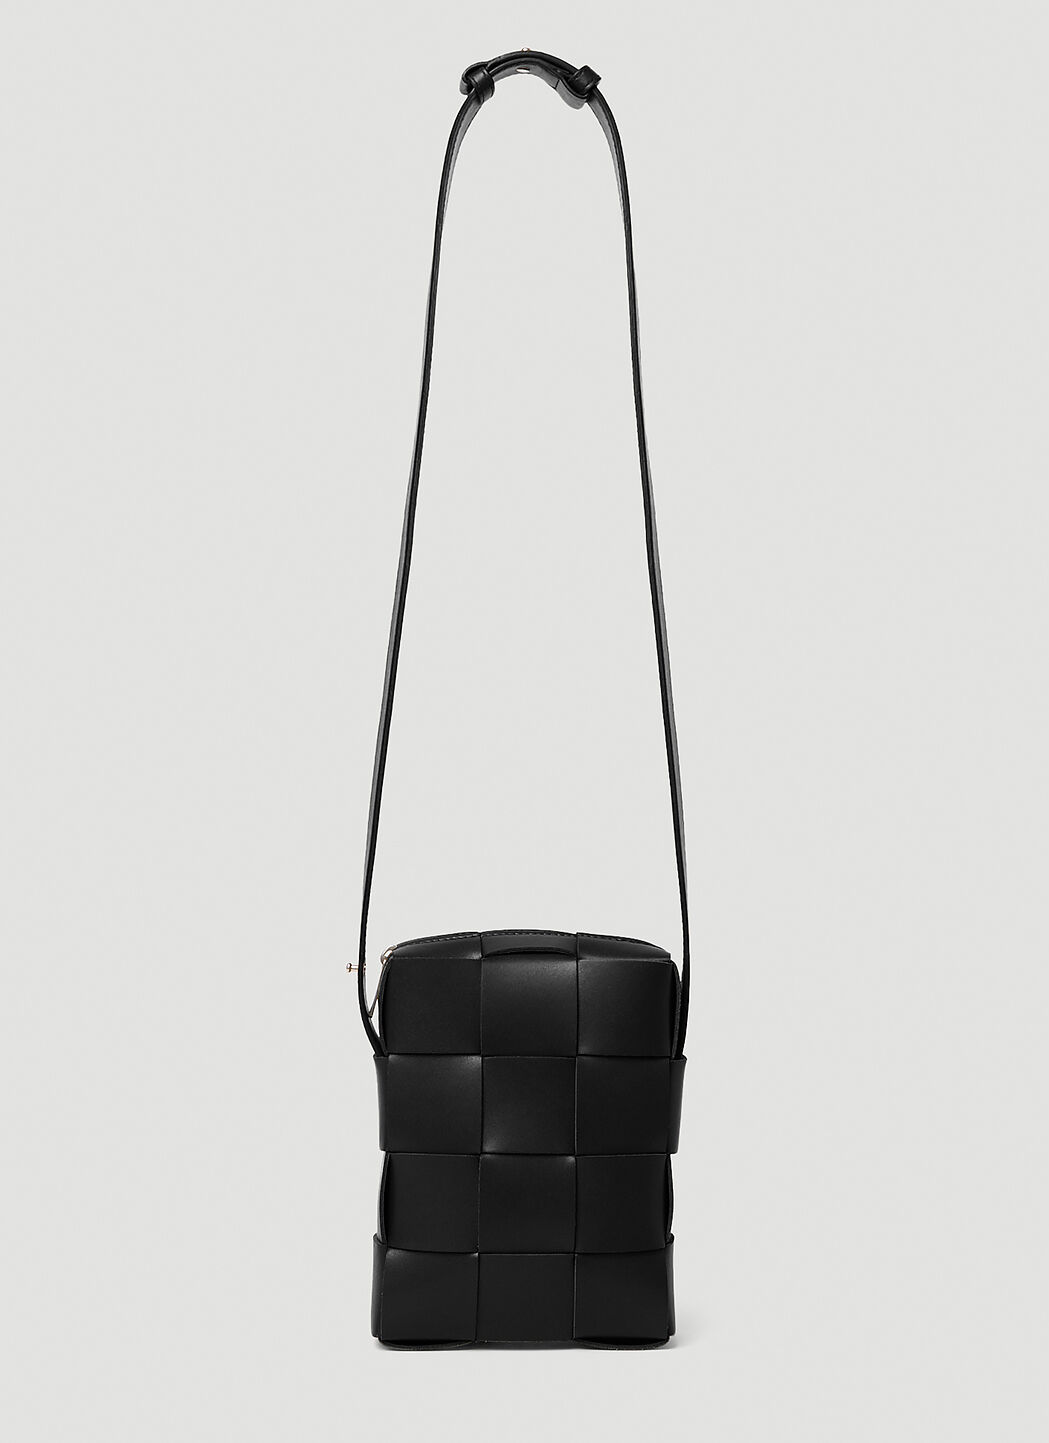 Vivienne Westwood カセットデザインのジッパー付きフォンポーチ オレンジ vvw0156015